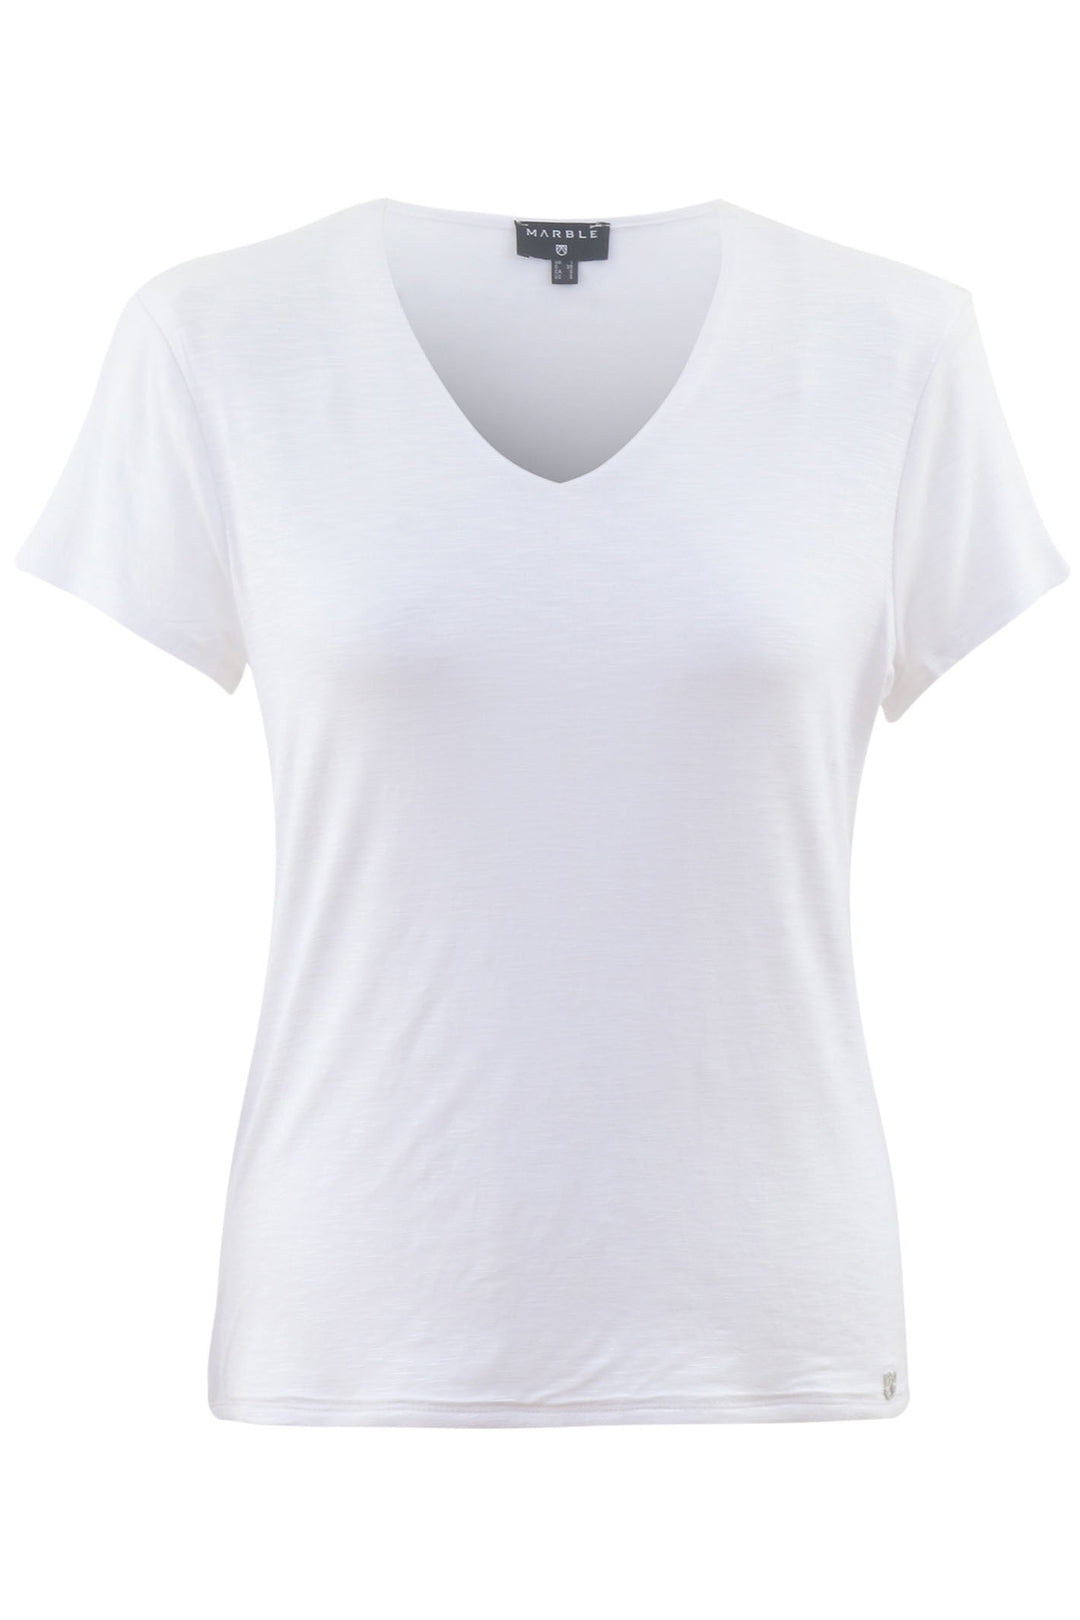 Marble 6539 102 White V-Neck T-Shirt - Dotique